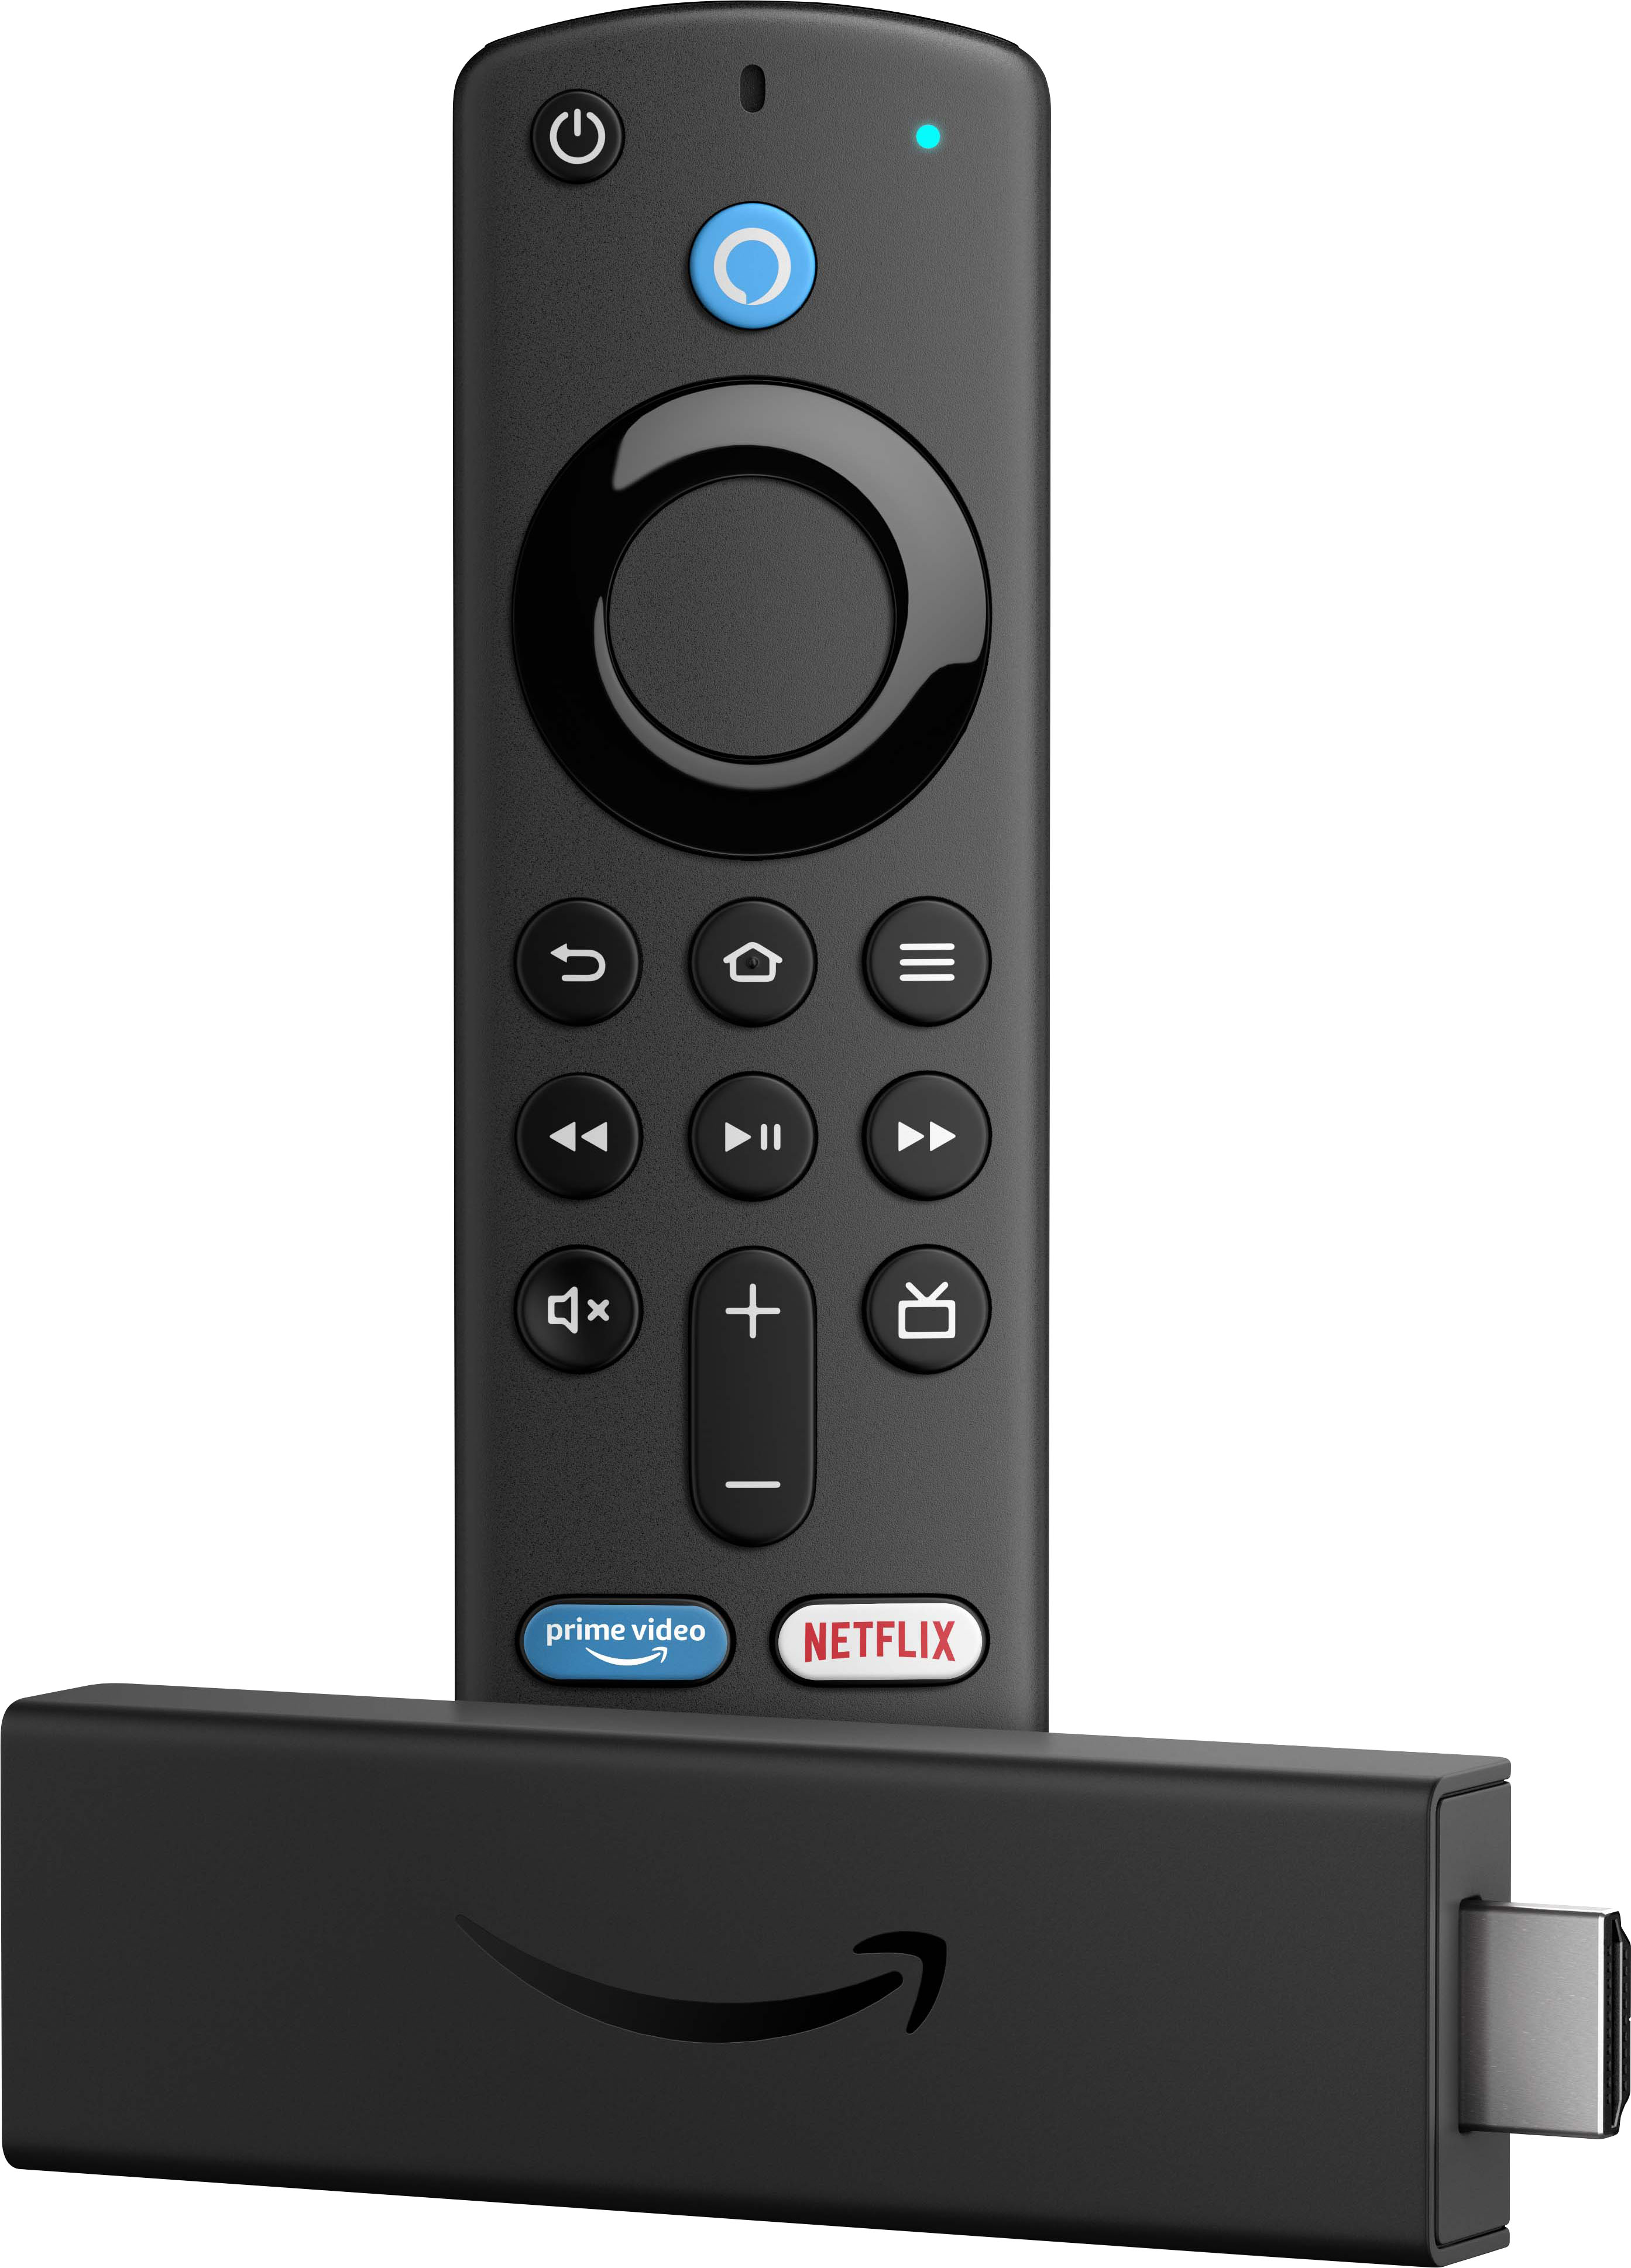 Fire TV Stick 4K with Alexa Voice Remote